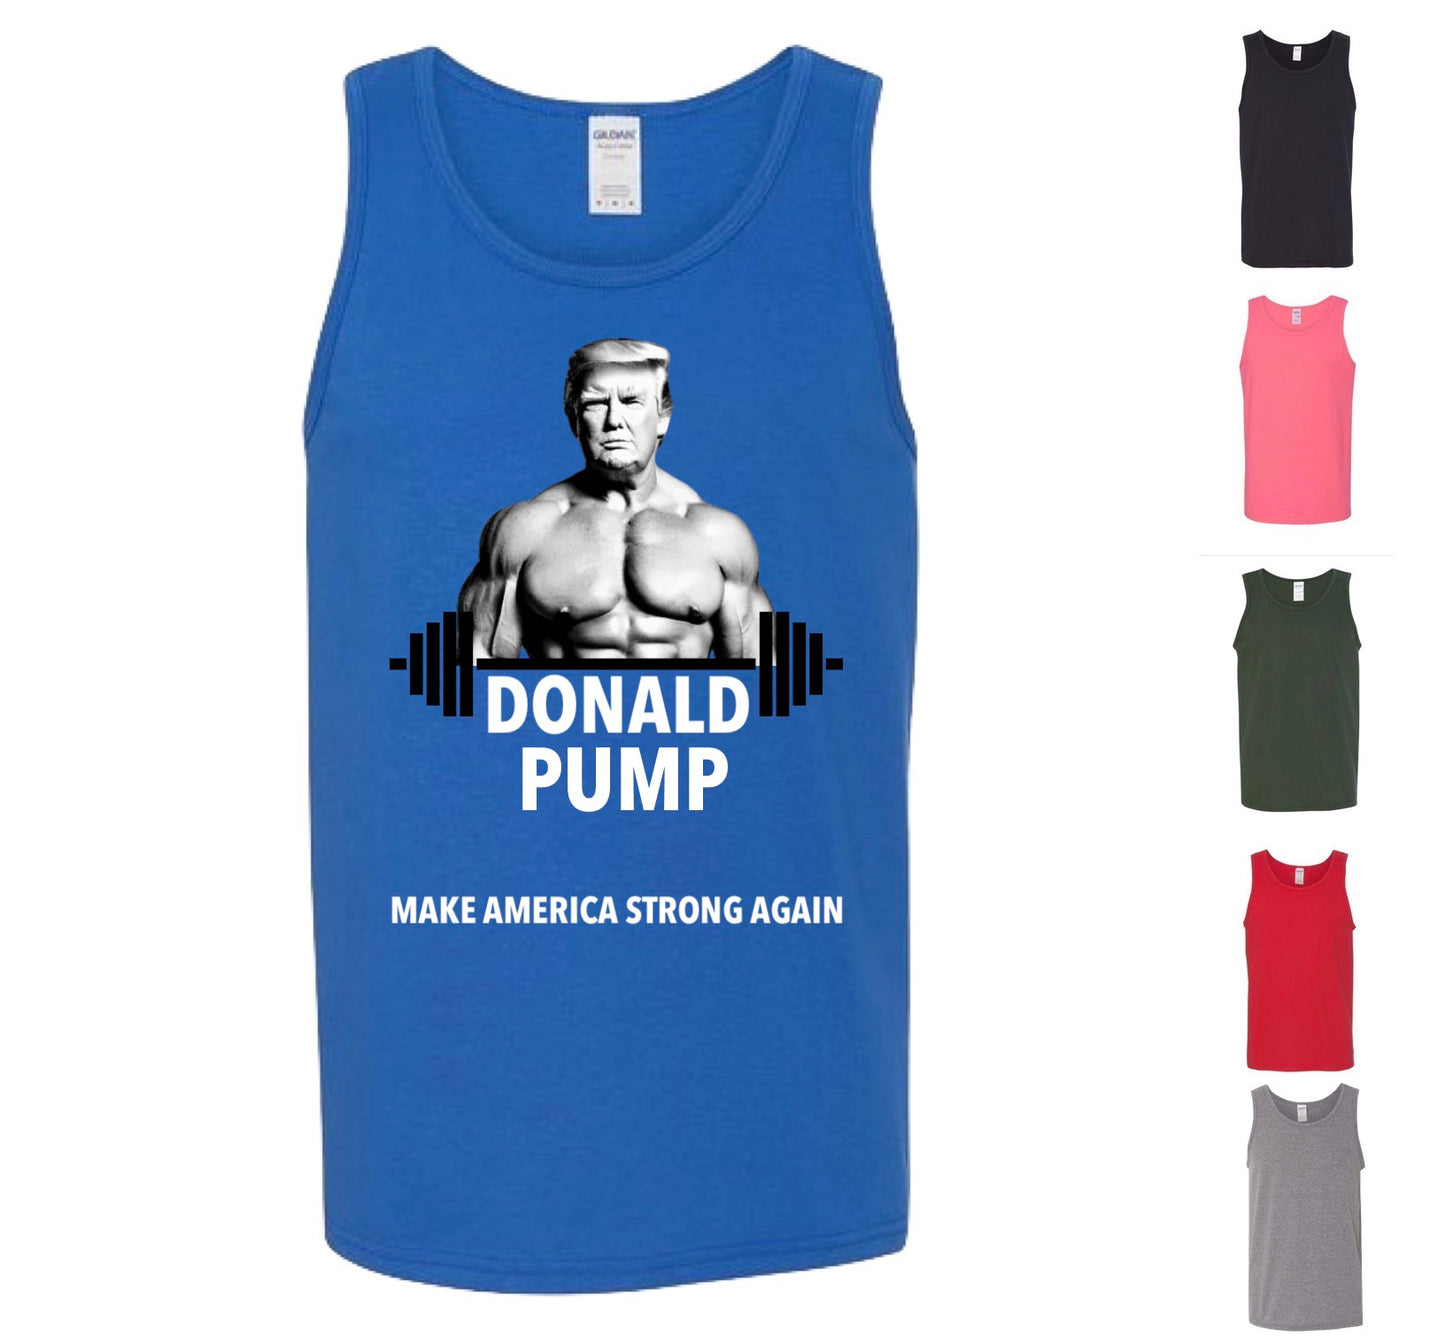 Donald PUMP - Make America Strong Again! (Free Shipping)